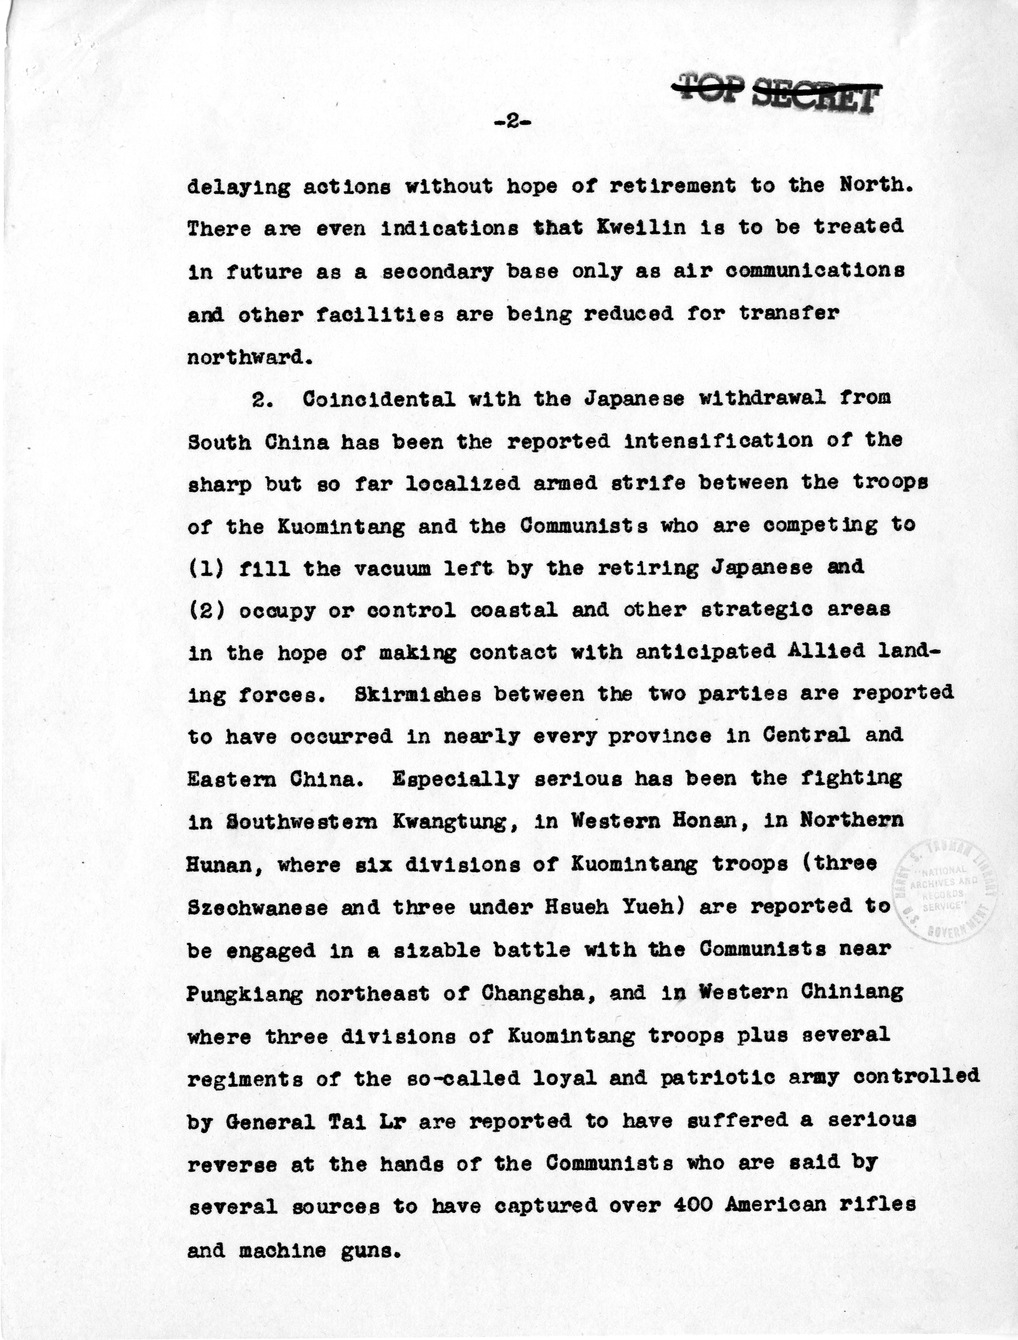 Memorandum from Joseph Grew to President Harry S. Truman, with Attachments